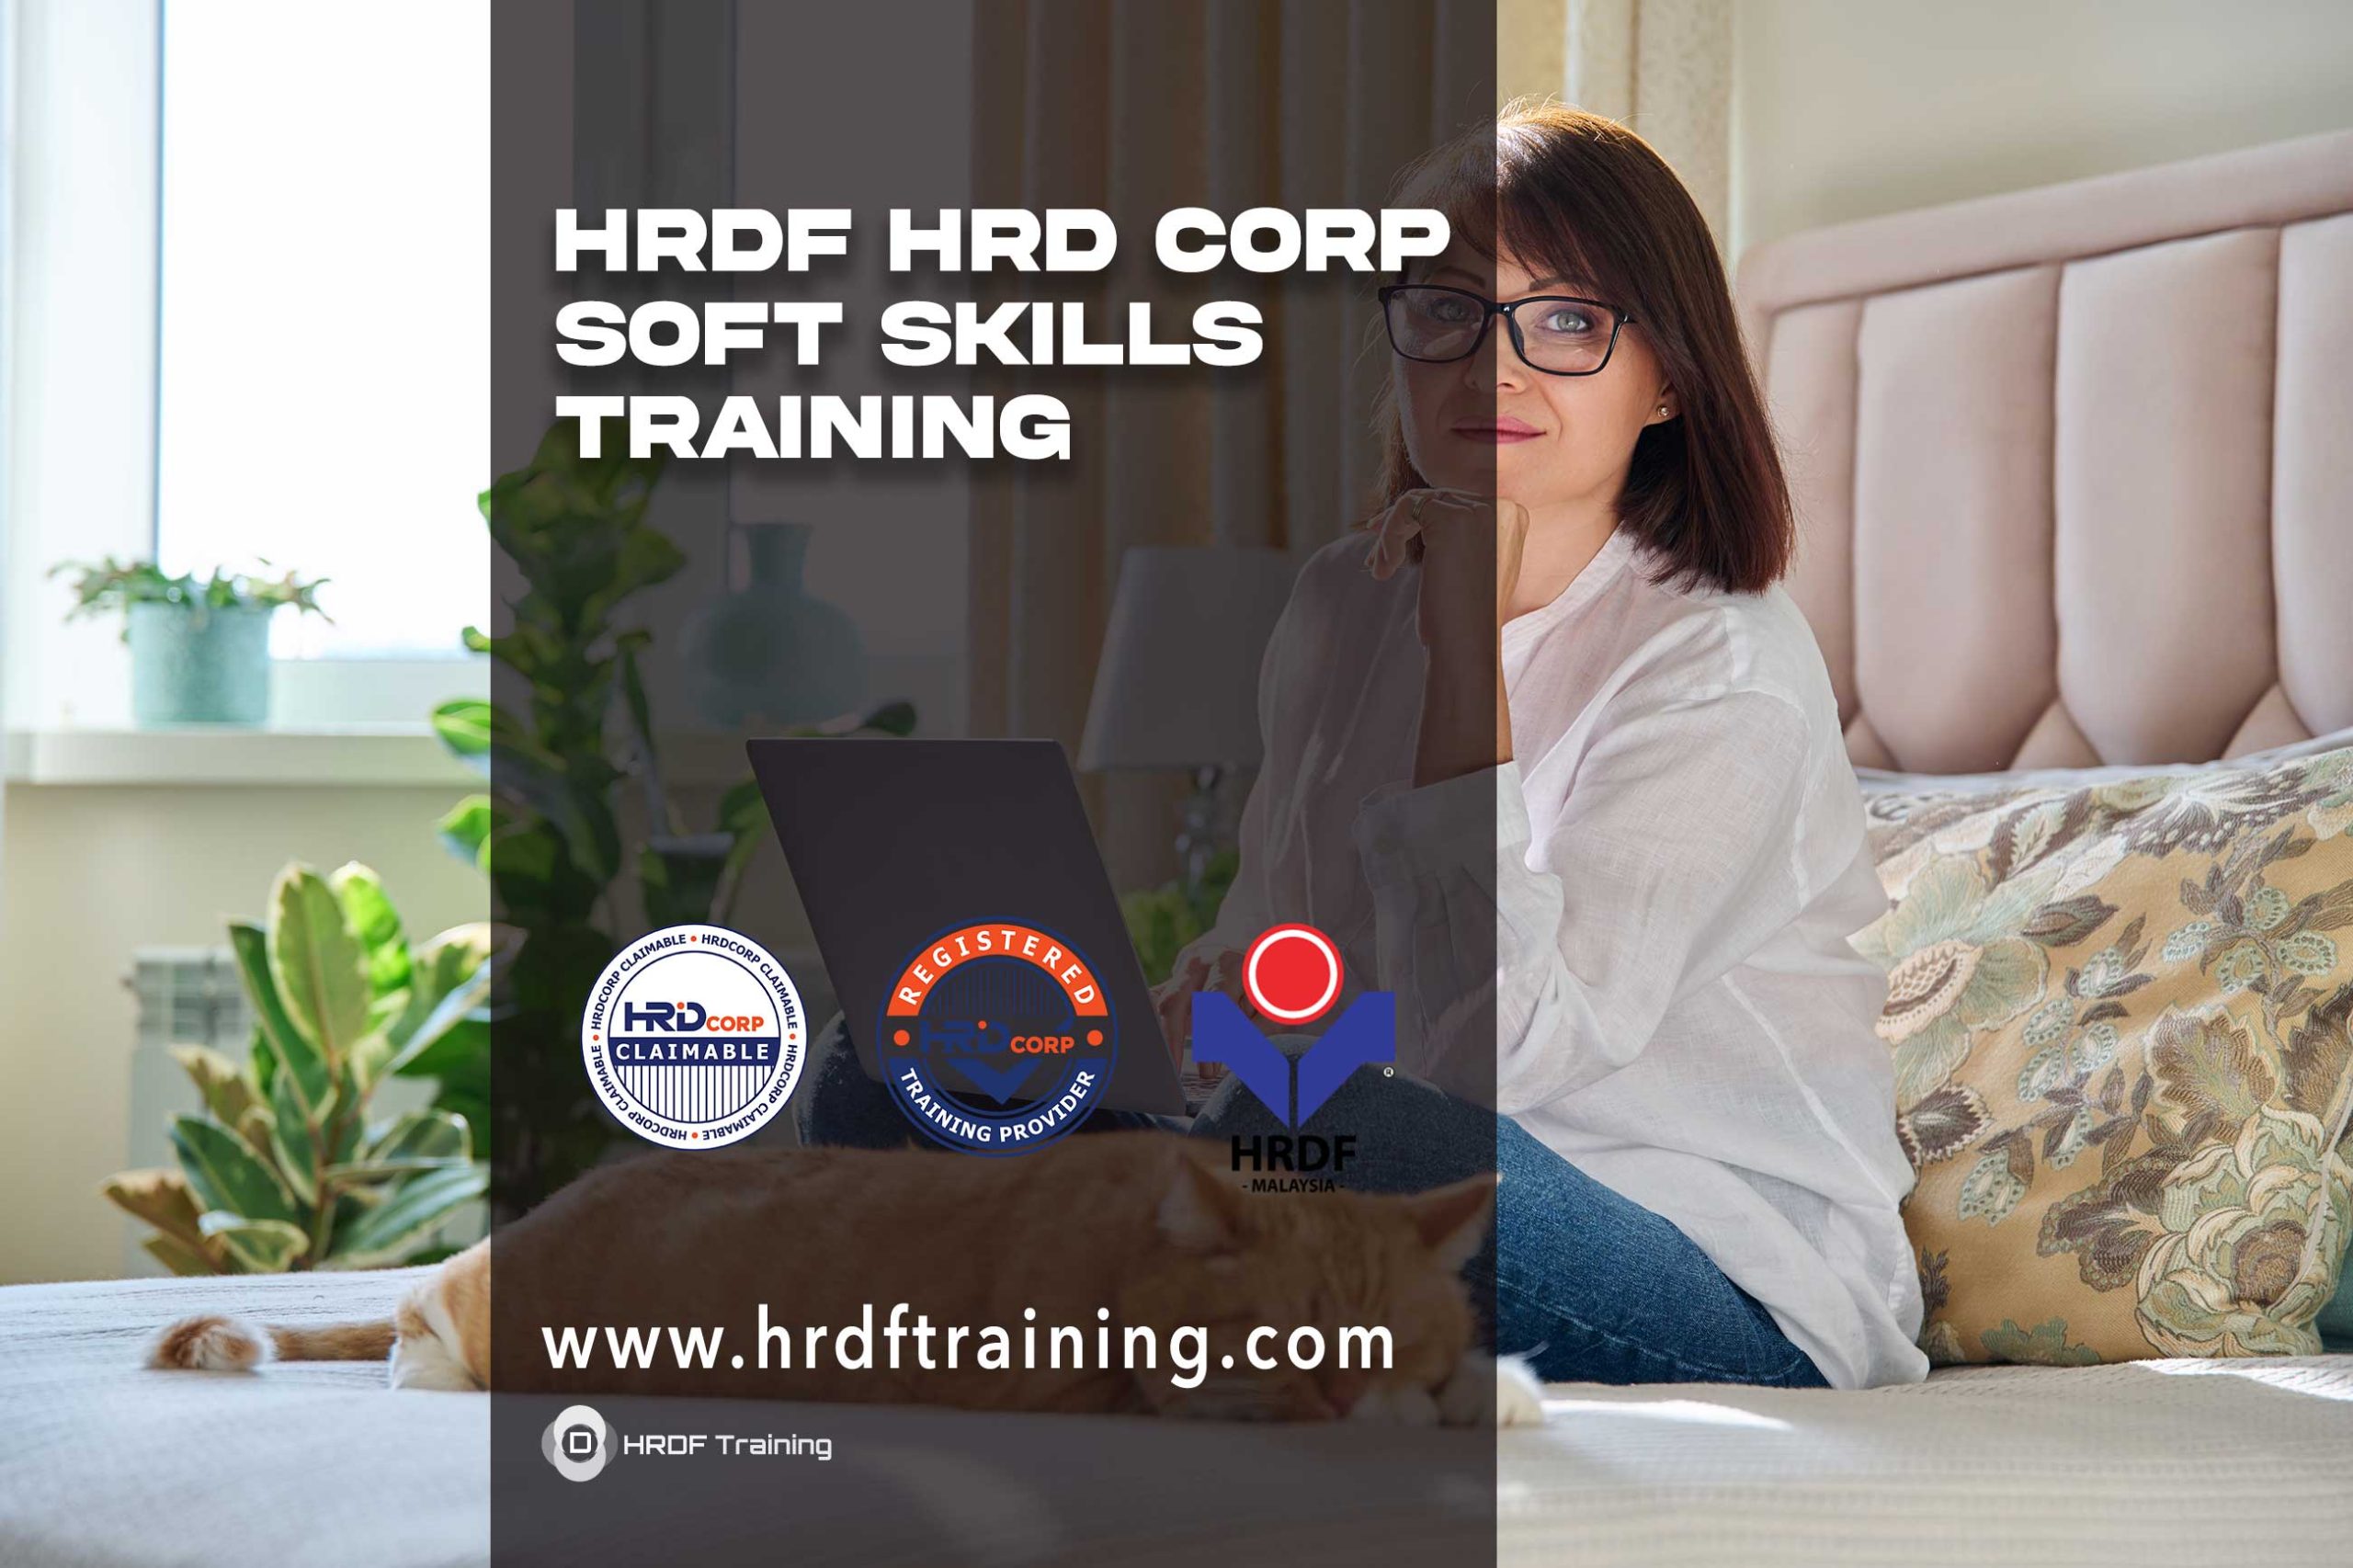 HRDF HRD Corp Soft Skills Training scaled